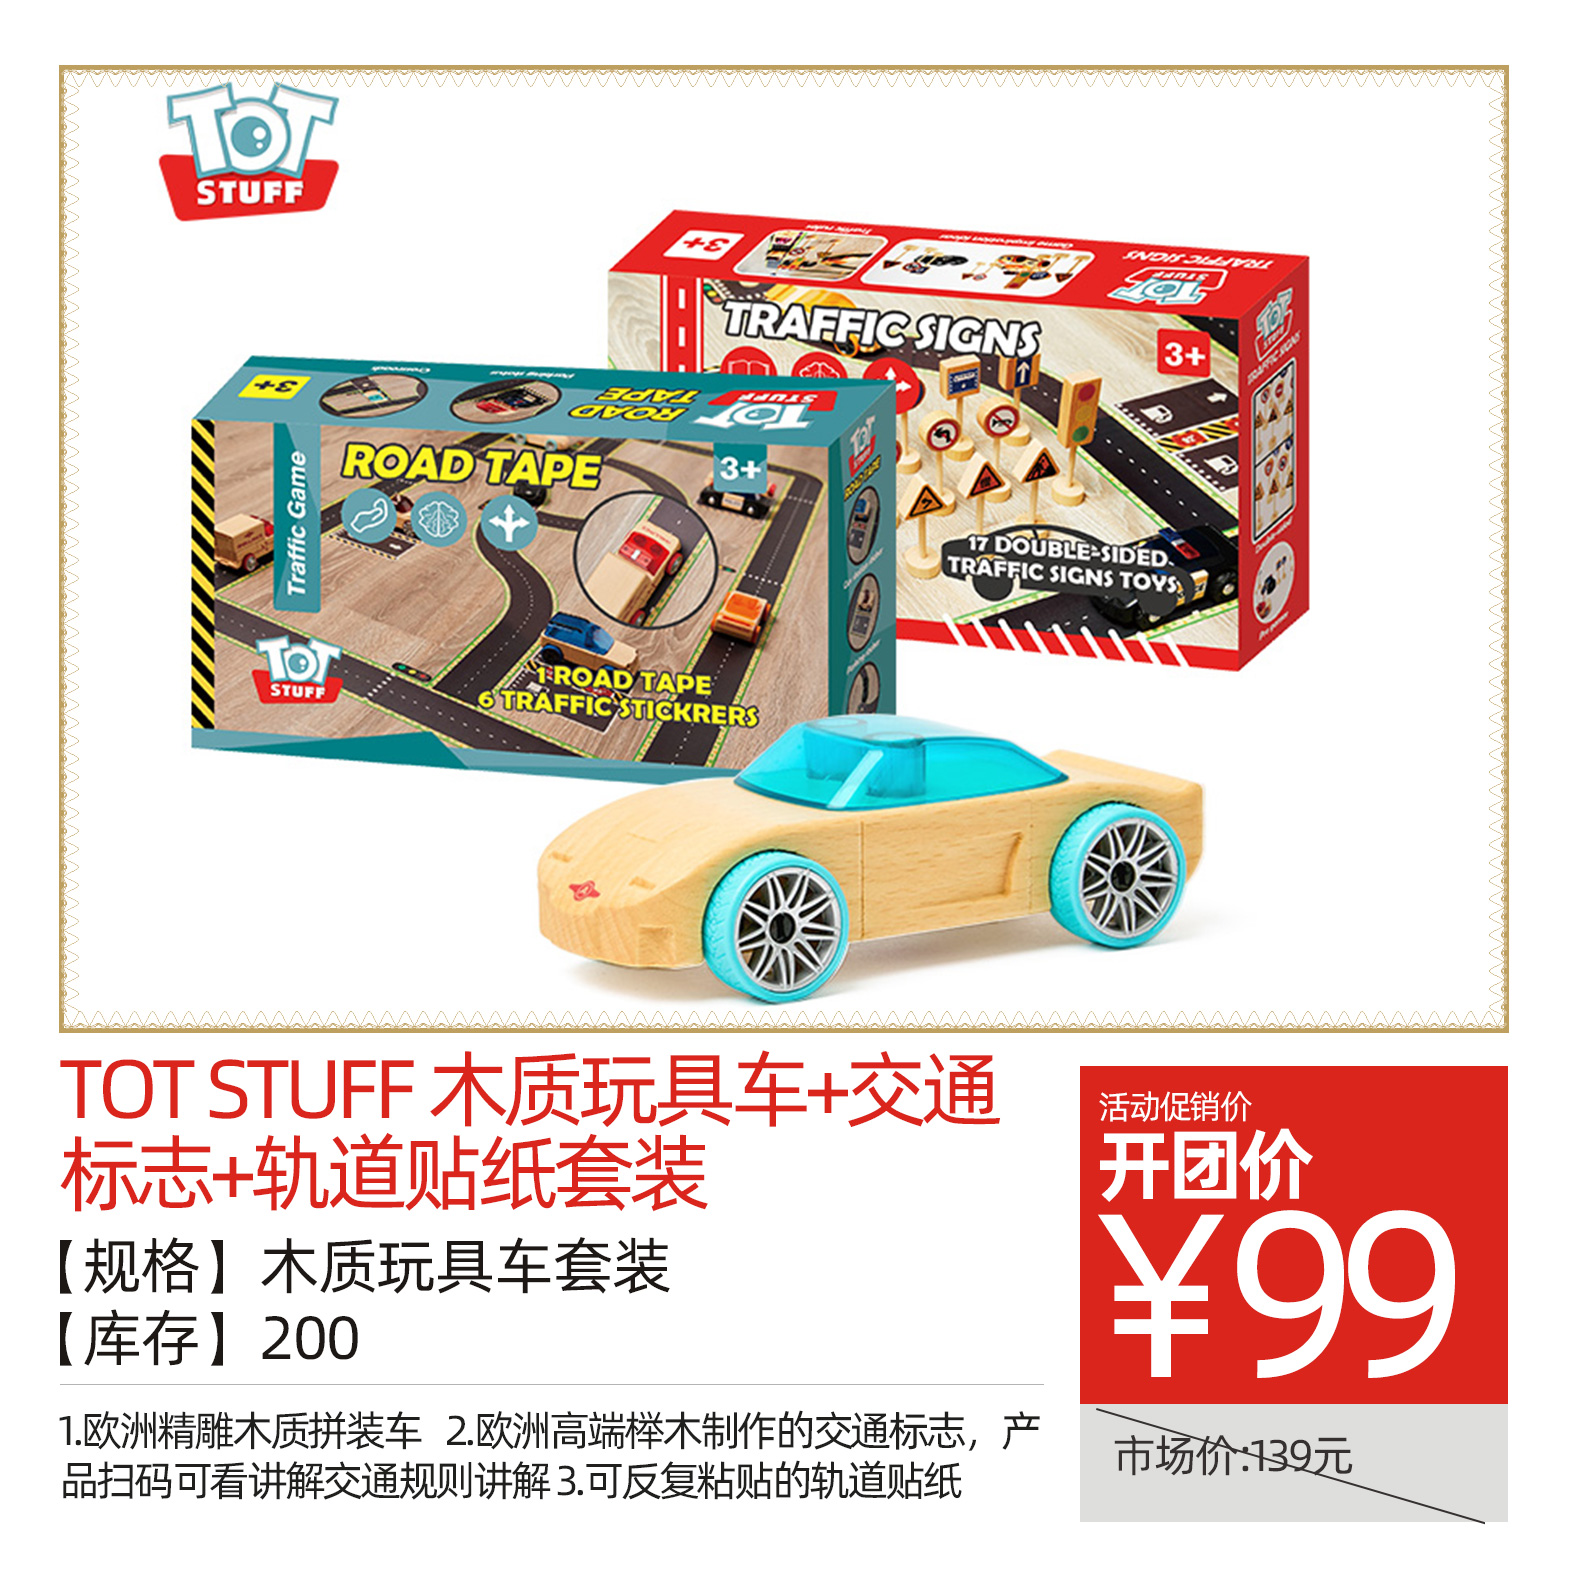 TOT STUFF 木质玩具车+交通标志+轨道贴纸套装